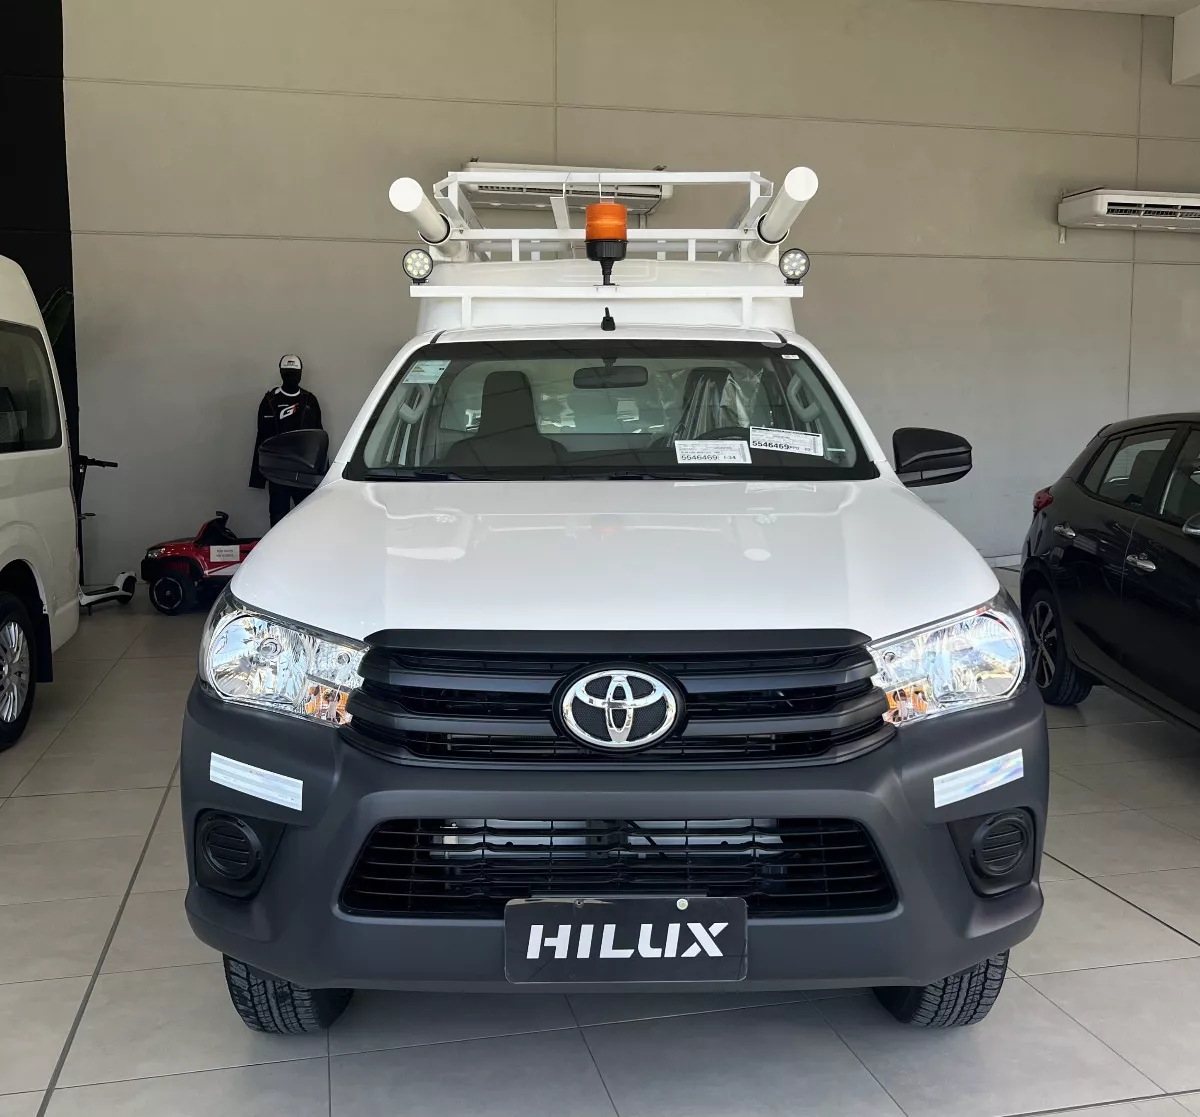 Toyota Hilux 4x4 C/s Dx 2.4 Tdi 6 M/t Cover